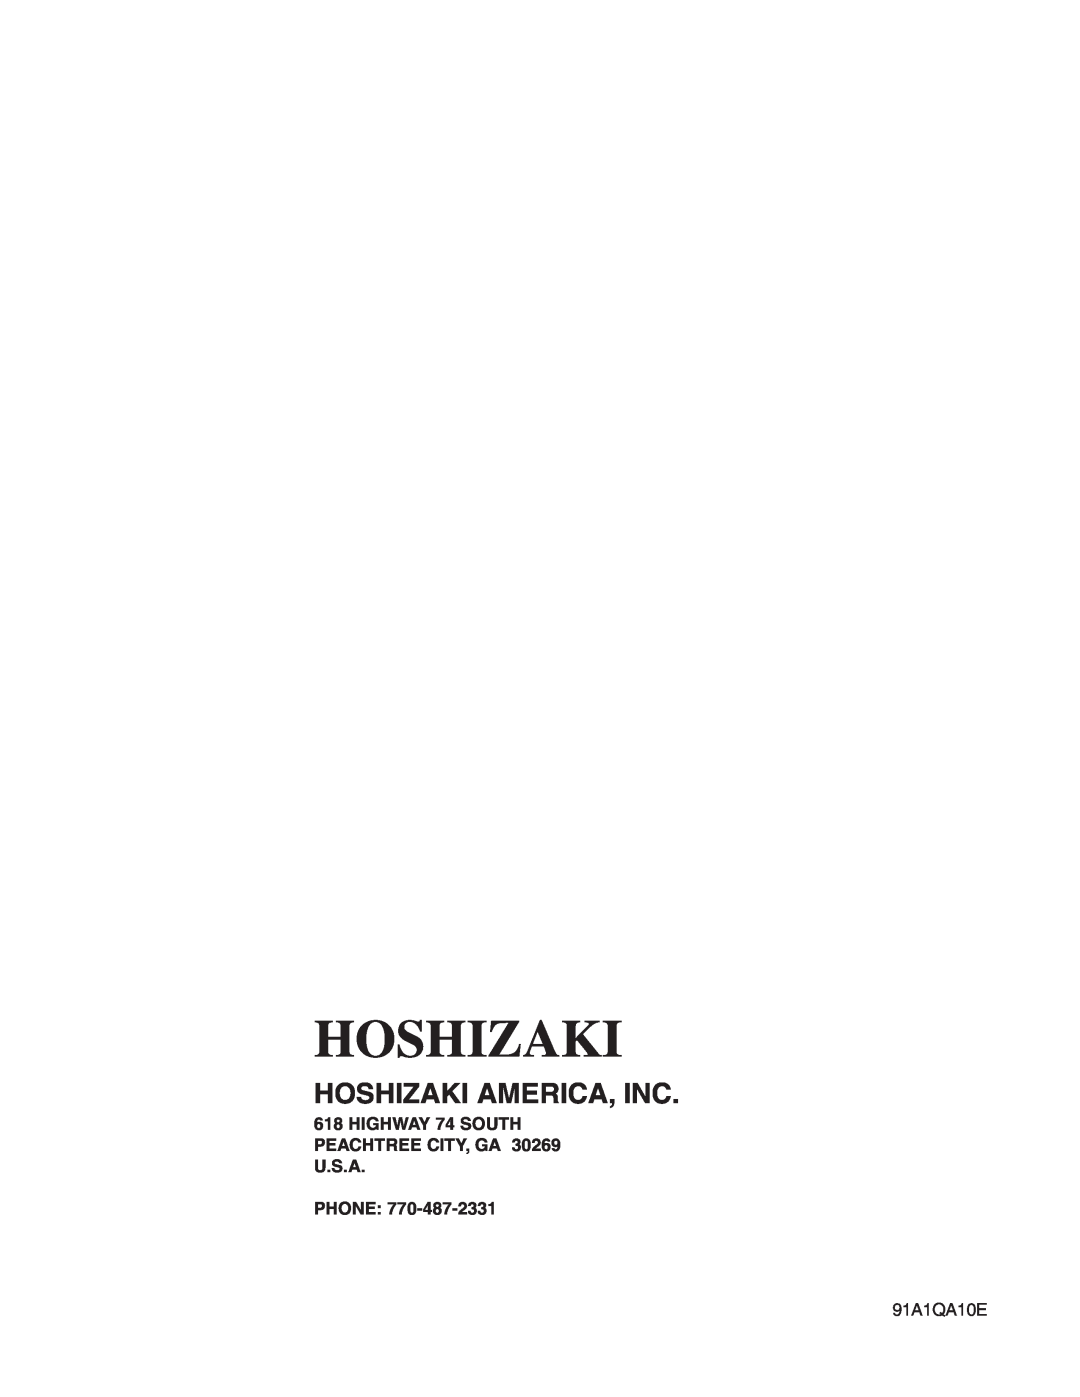 Hoshizaki KMD-900MRH, KMD-900MAH Hoshizaki America, Inc, HIGHWAY 74 SOUTH PEACHTREE CITY, GA 30269 U.S.A PHONE 